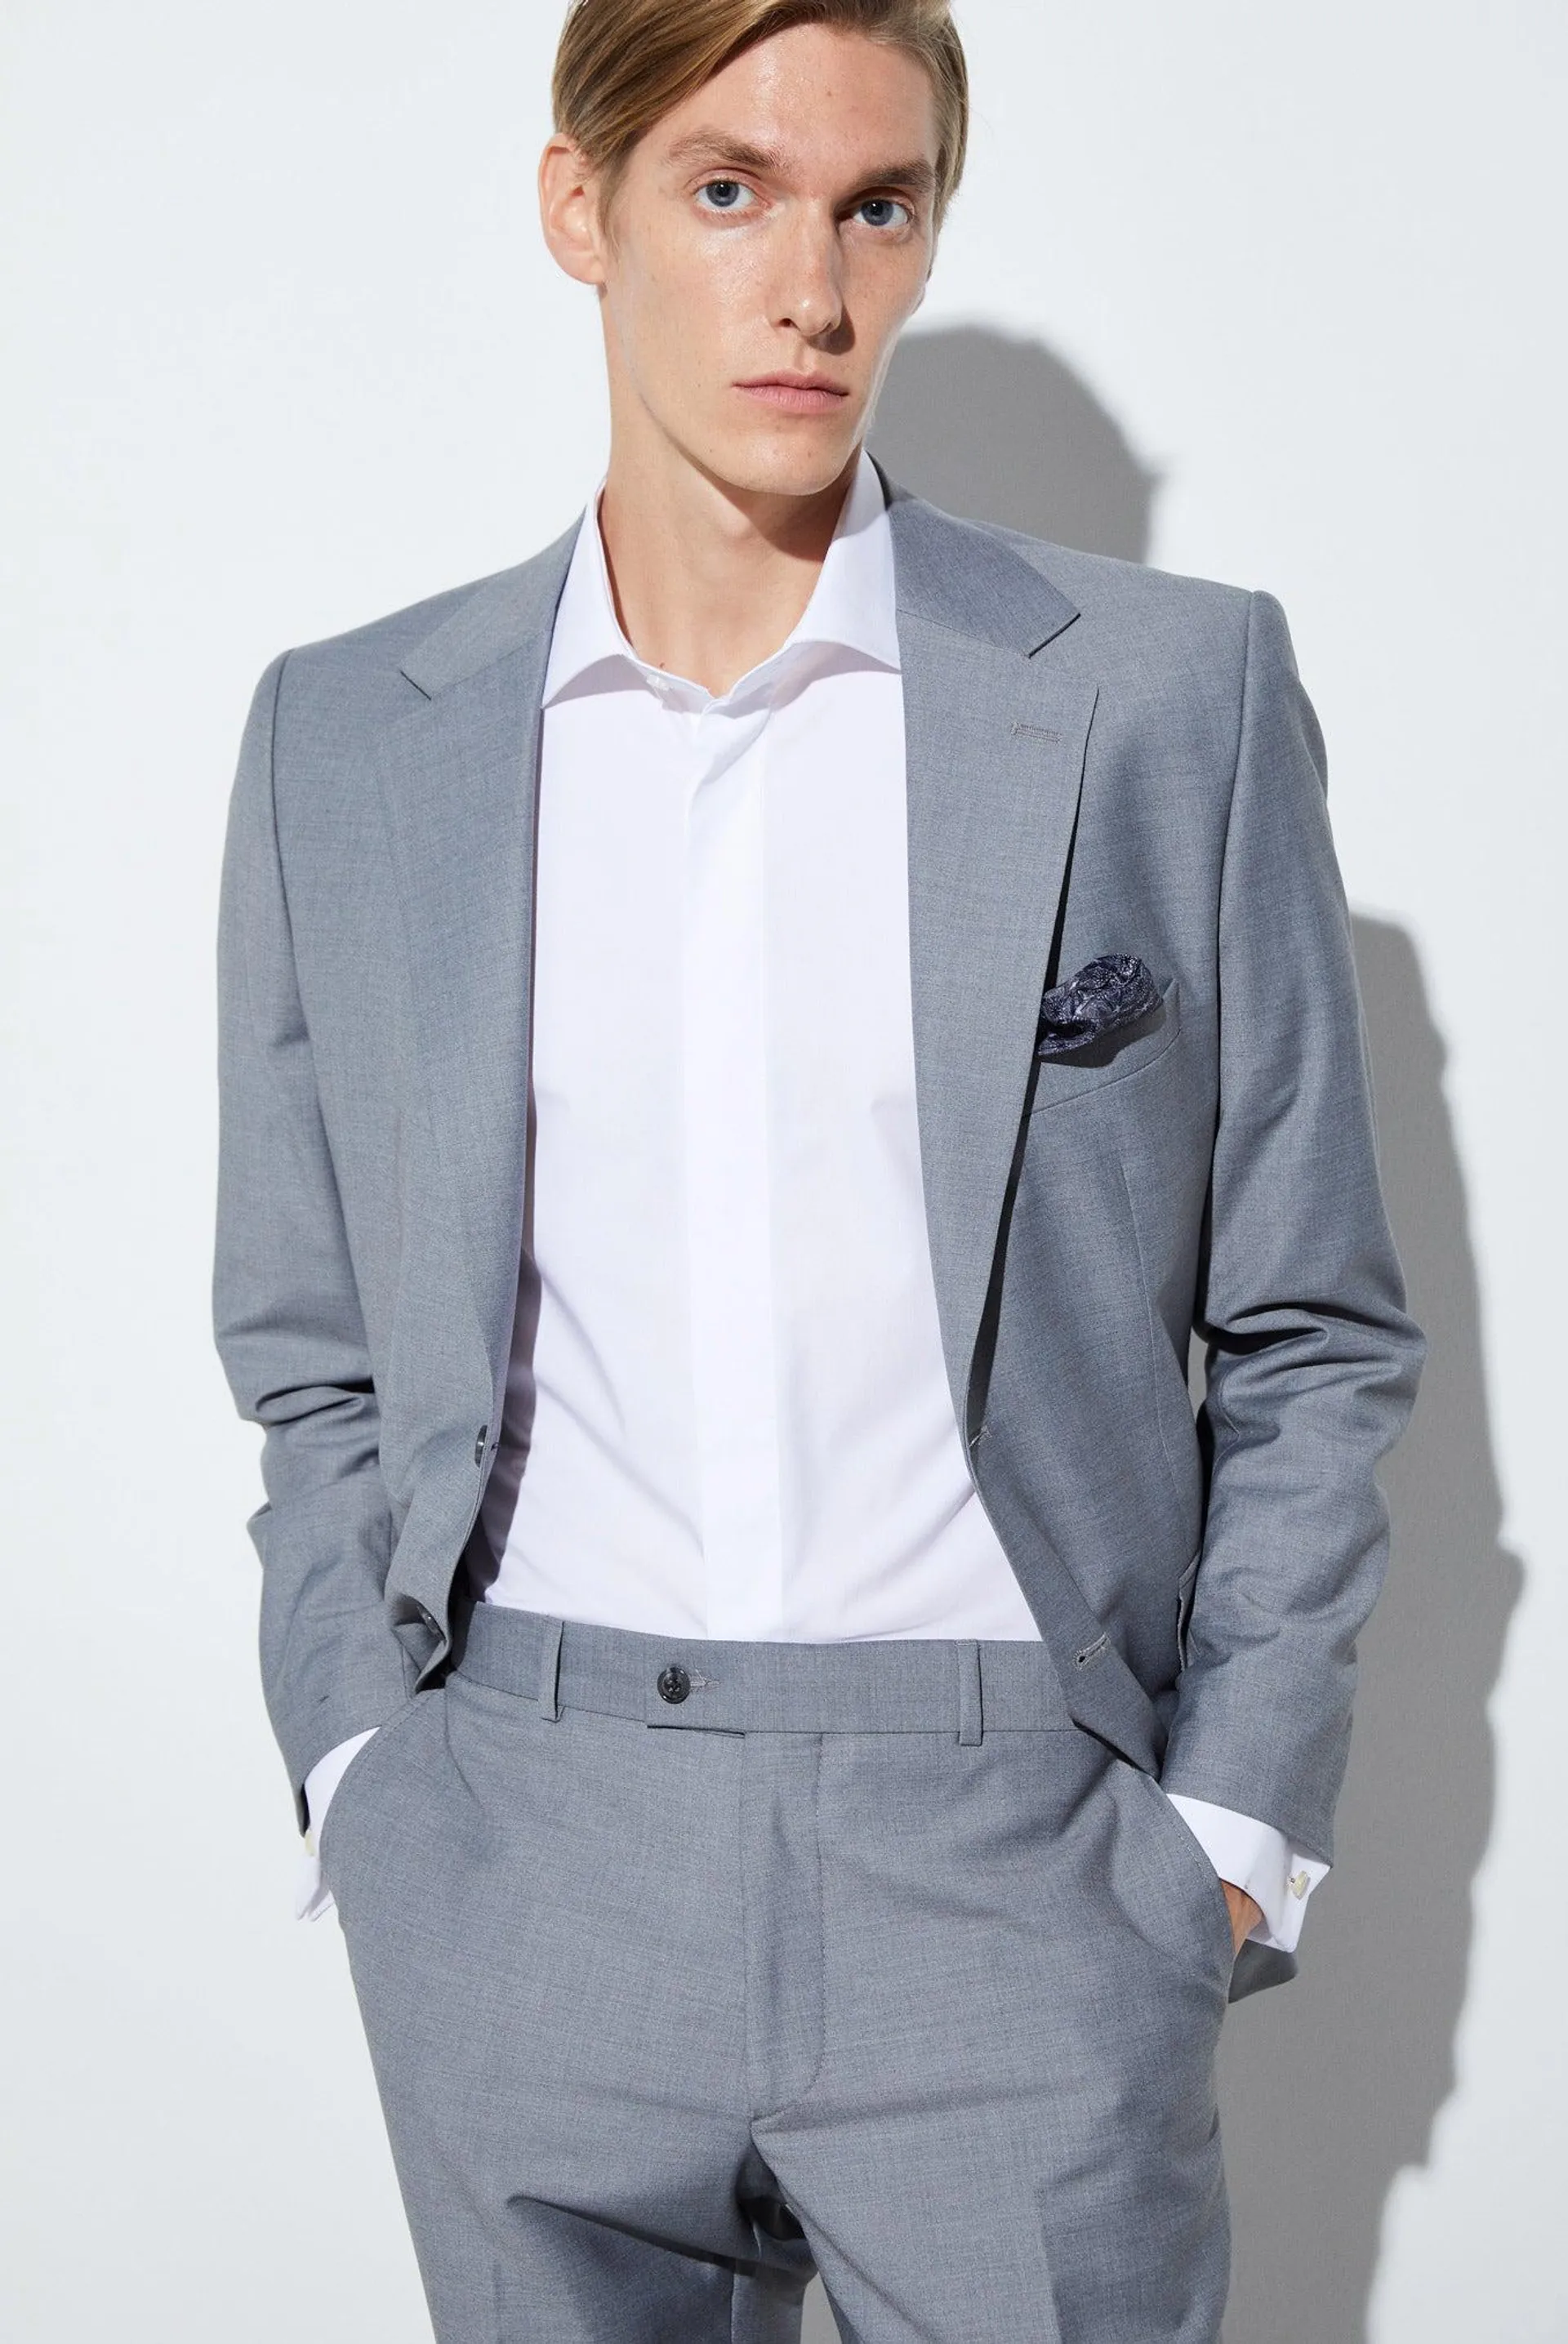 Polyviscose Man Suit Grey Plain